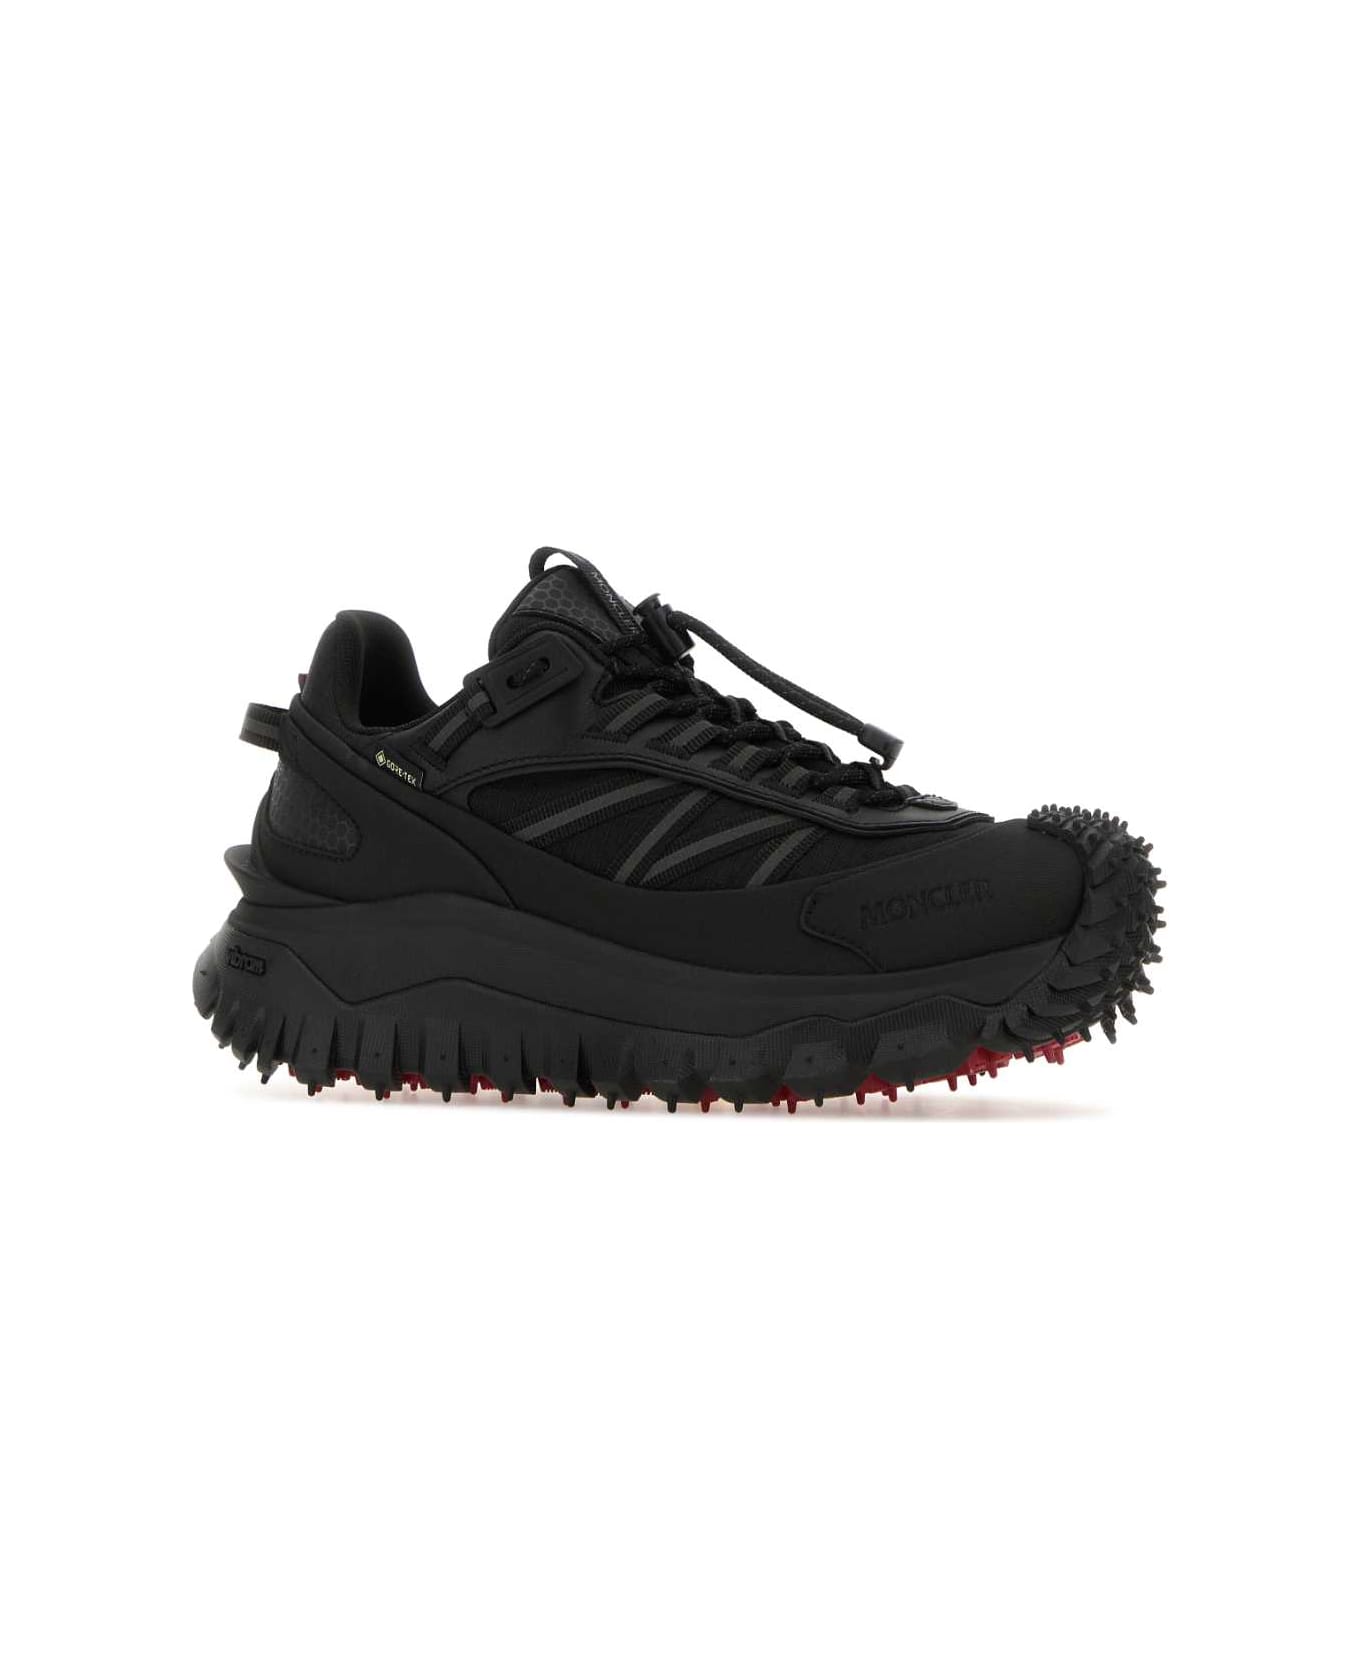 Moncler Black Fabric Trailgrip Gtx Sneakers - 999